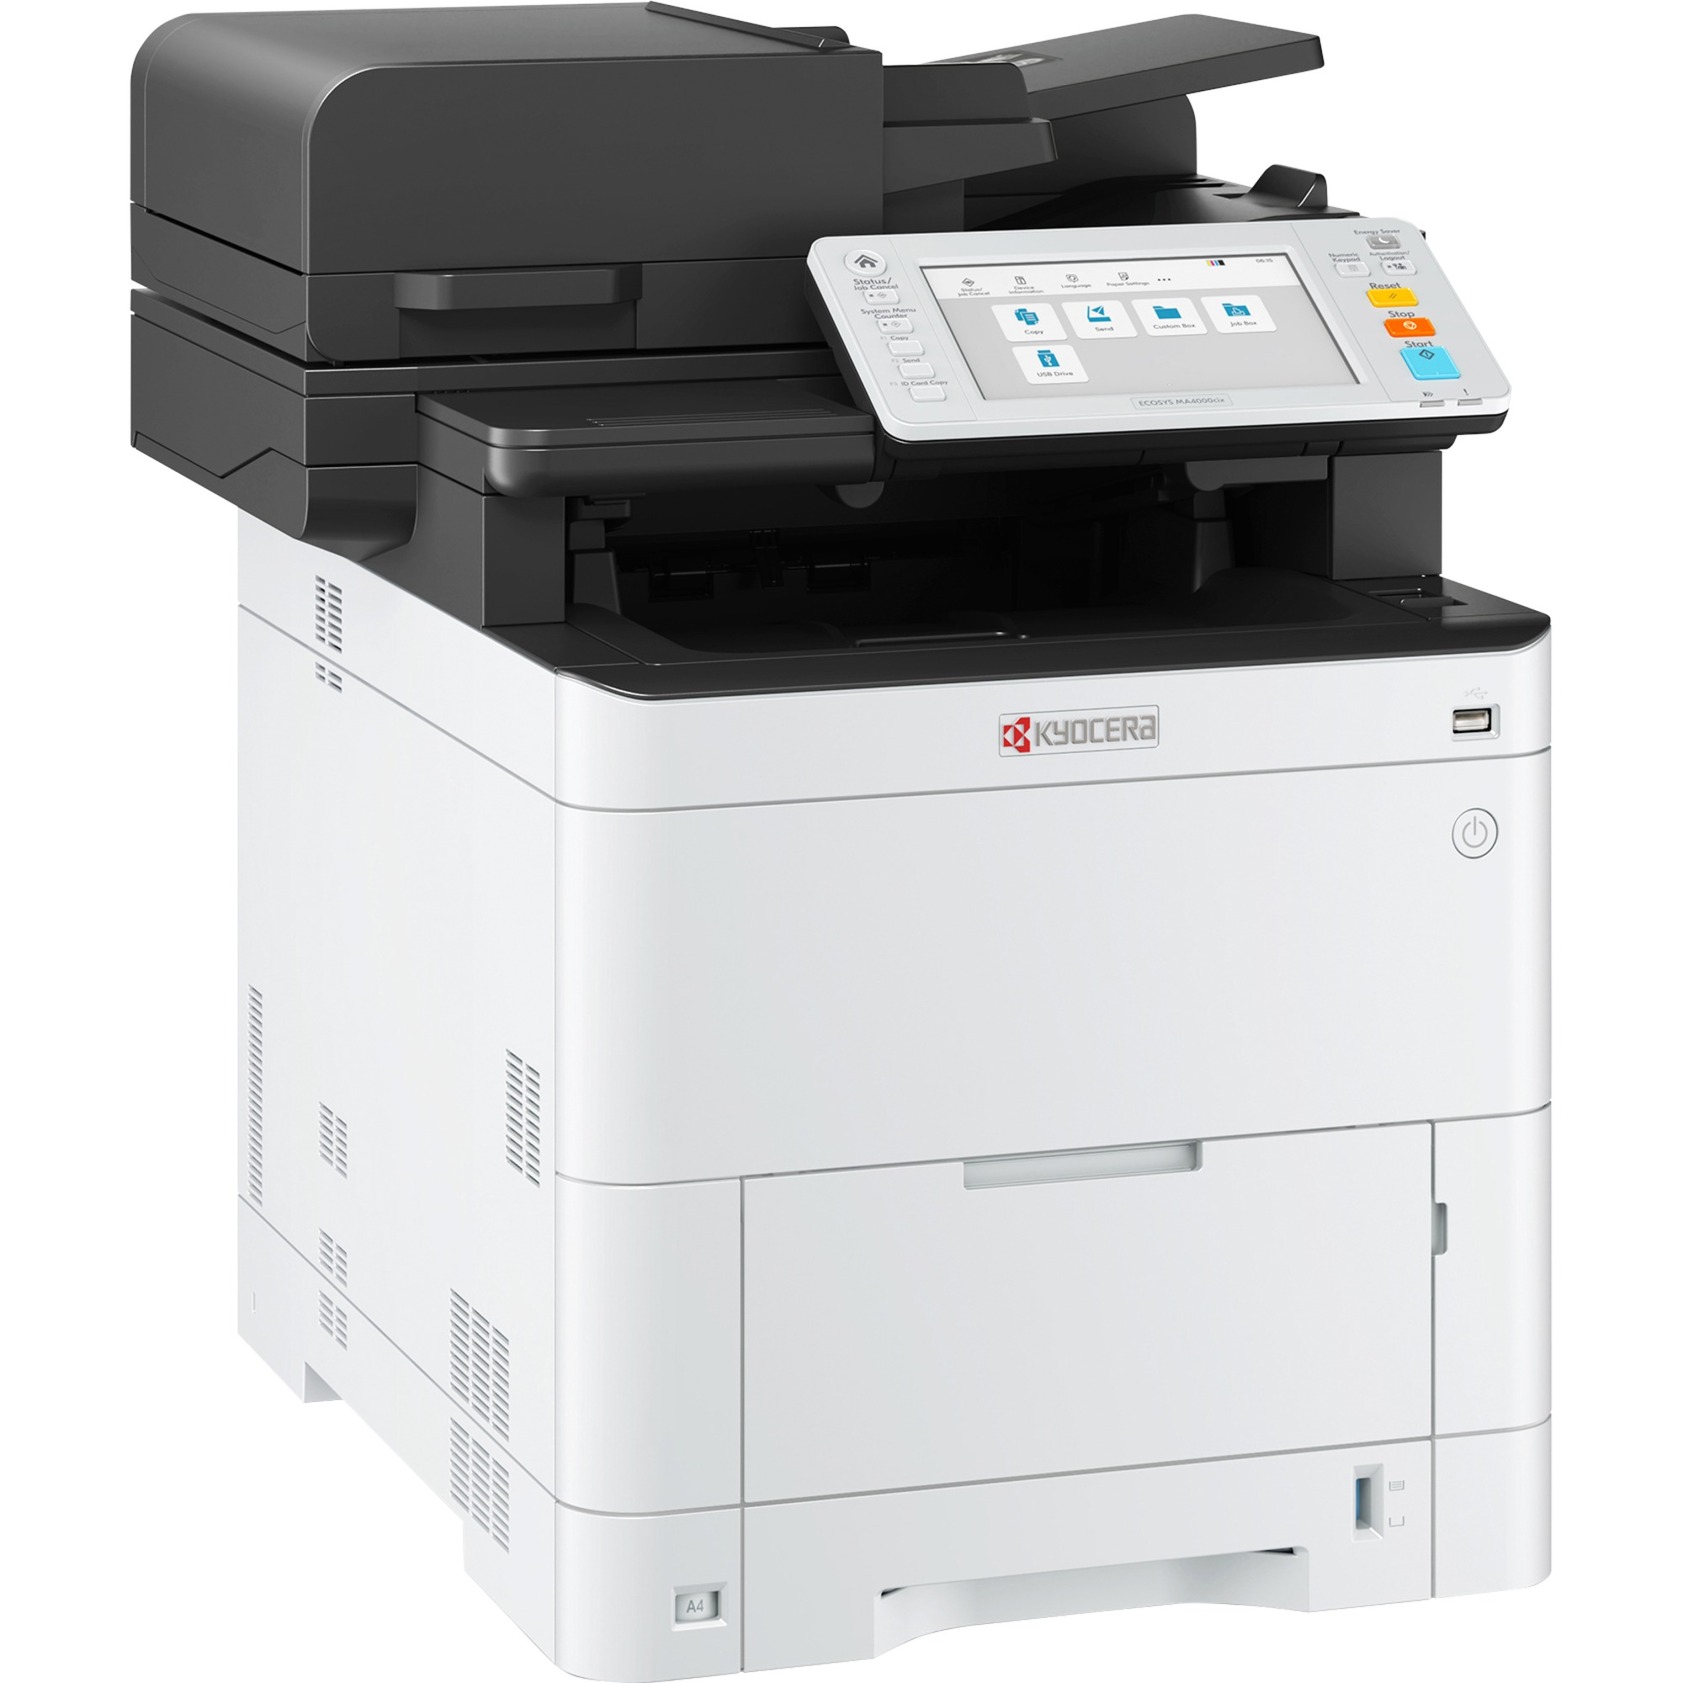 ECOSYS MA4000cix, Multifunktionsdrucker von Kyocera